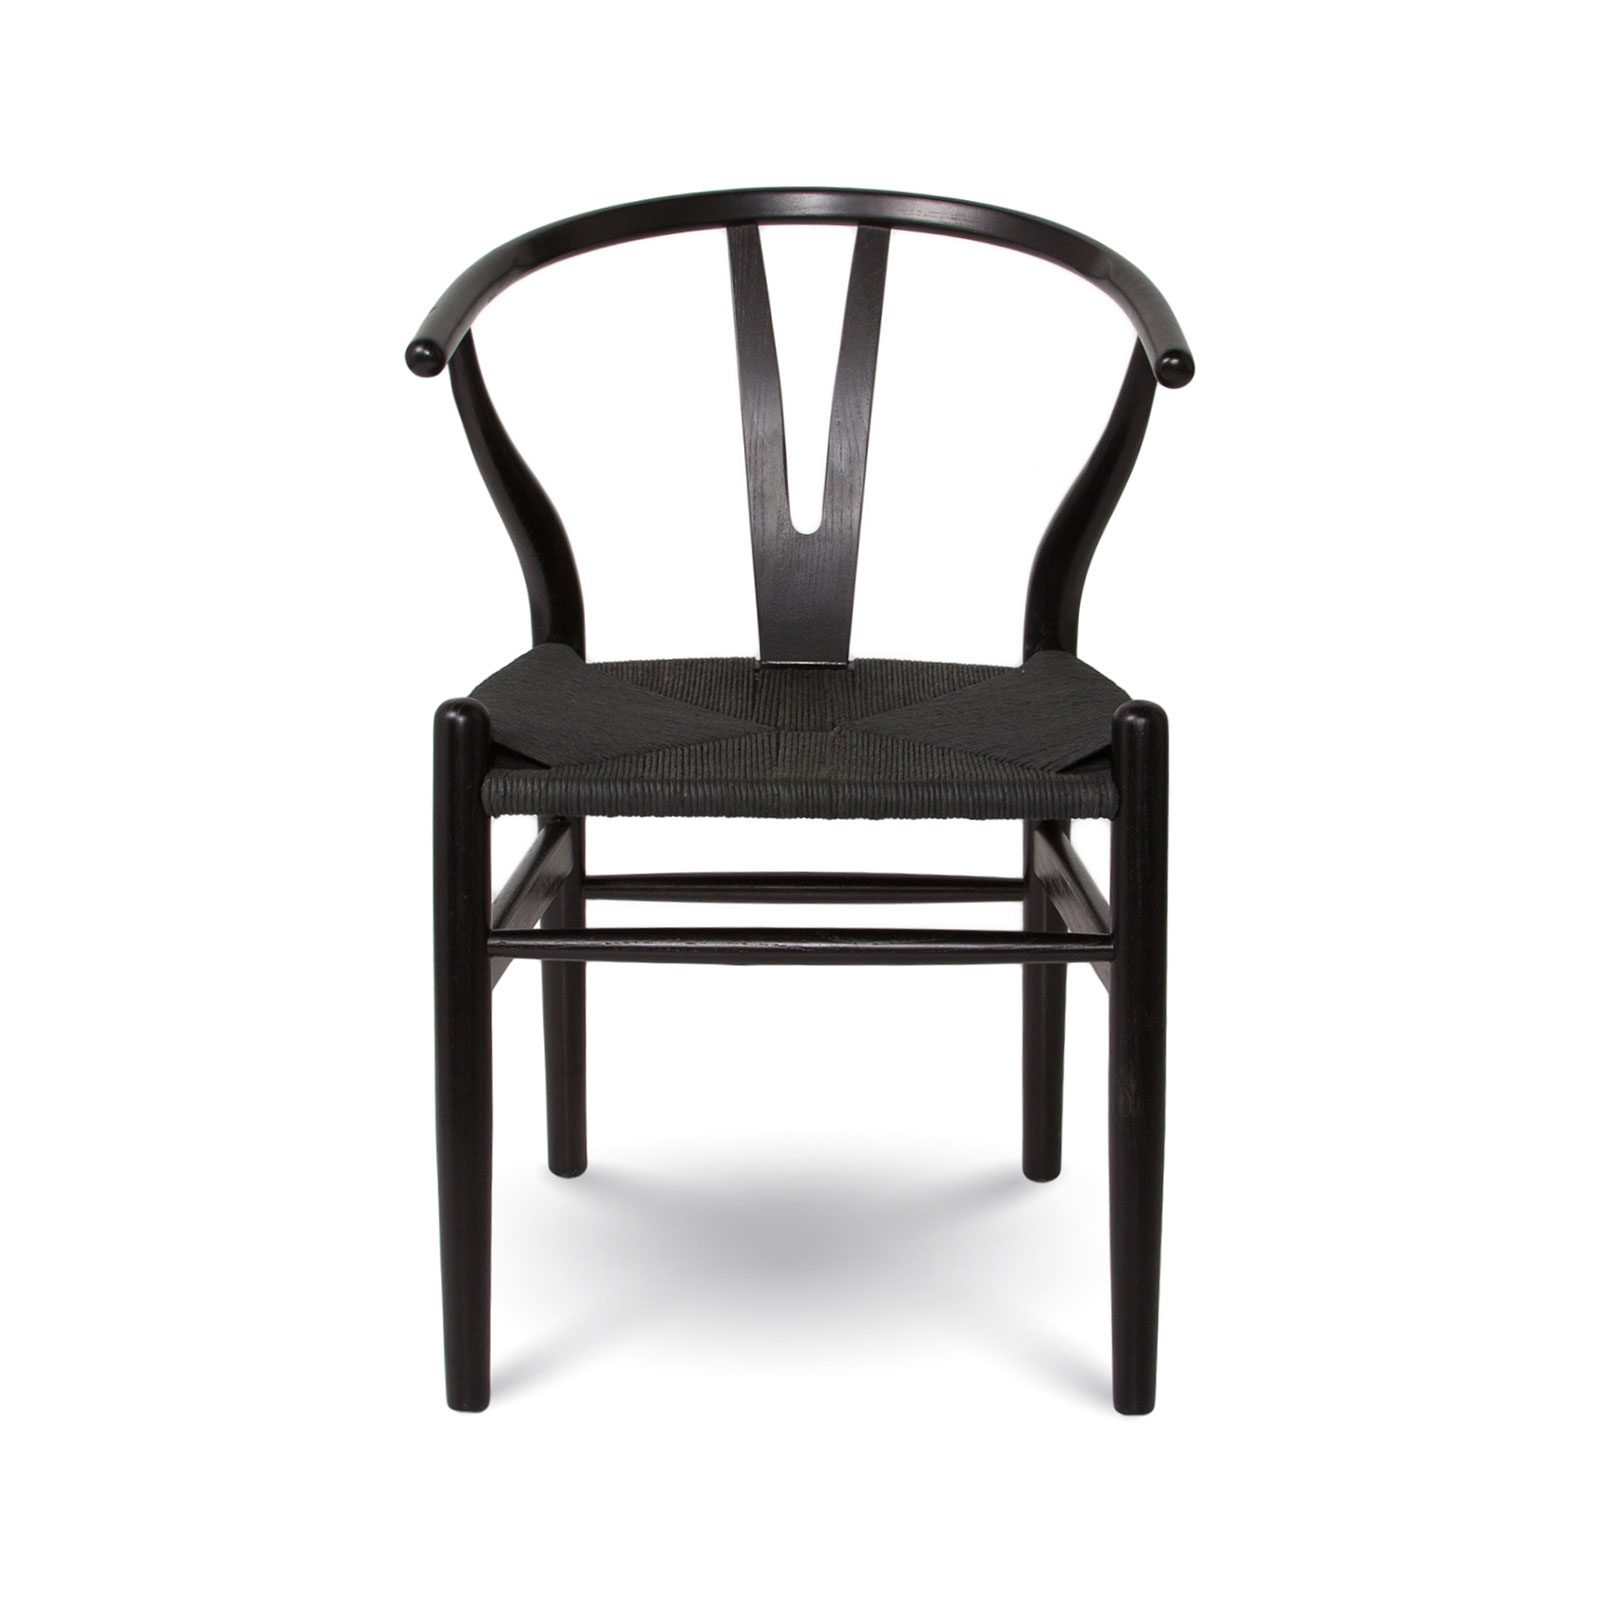 New York Chair - ADM Design Inc